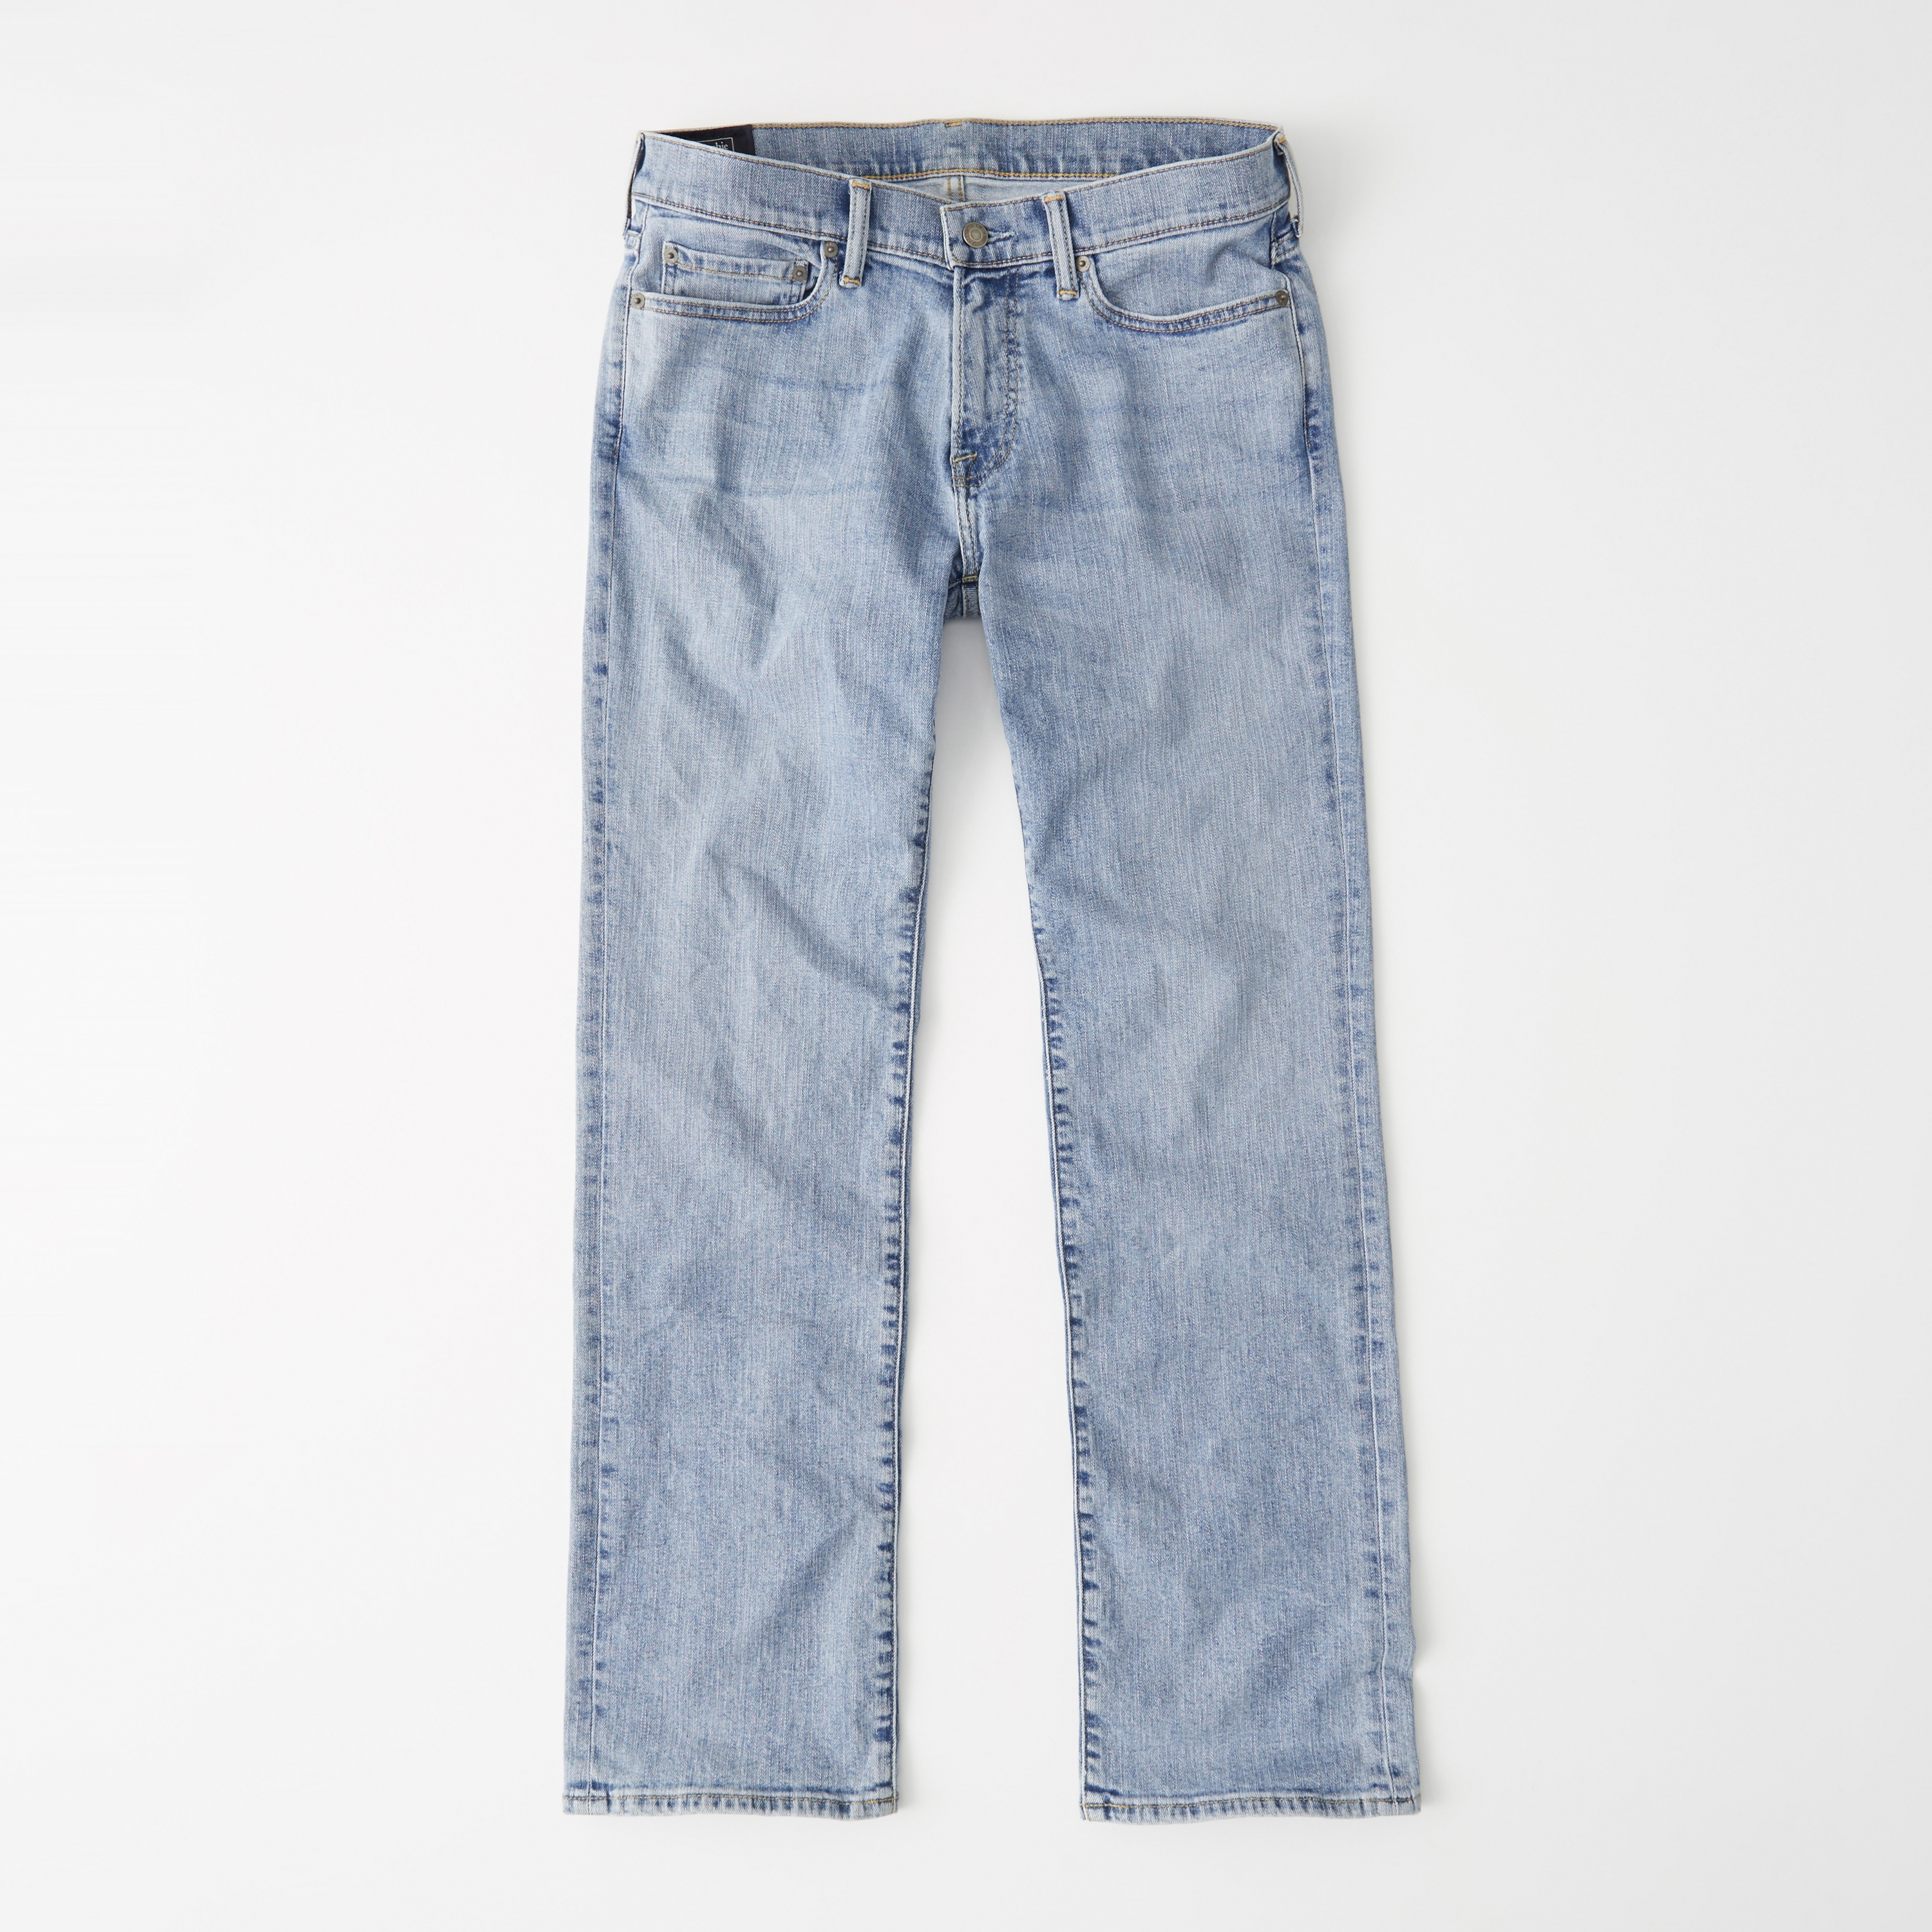 abercrombie womens jeans sale